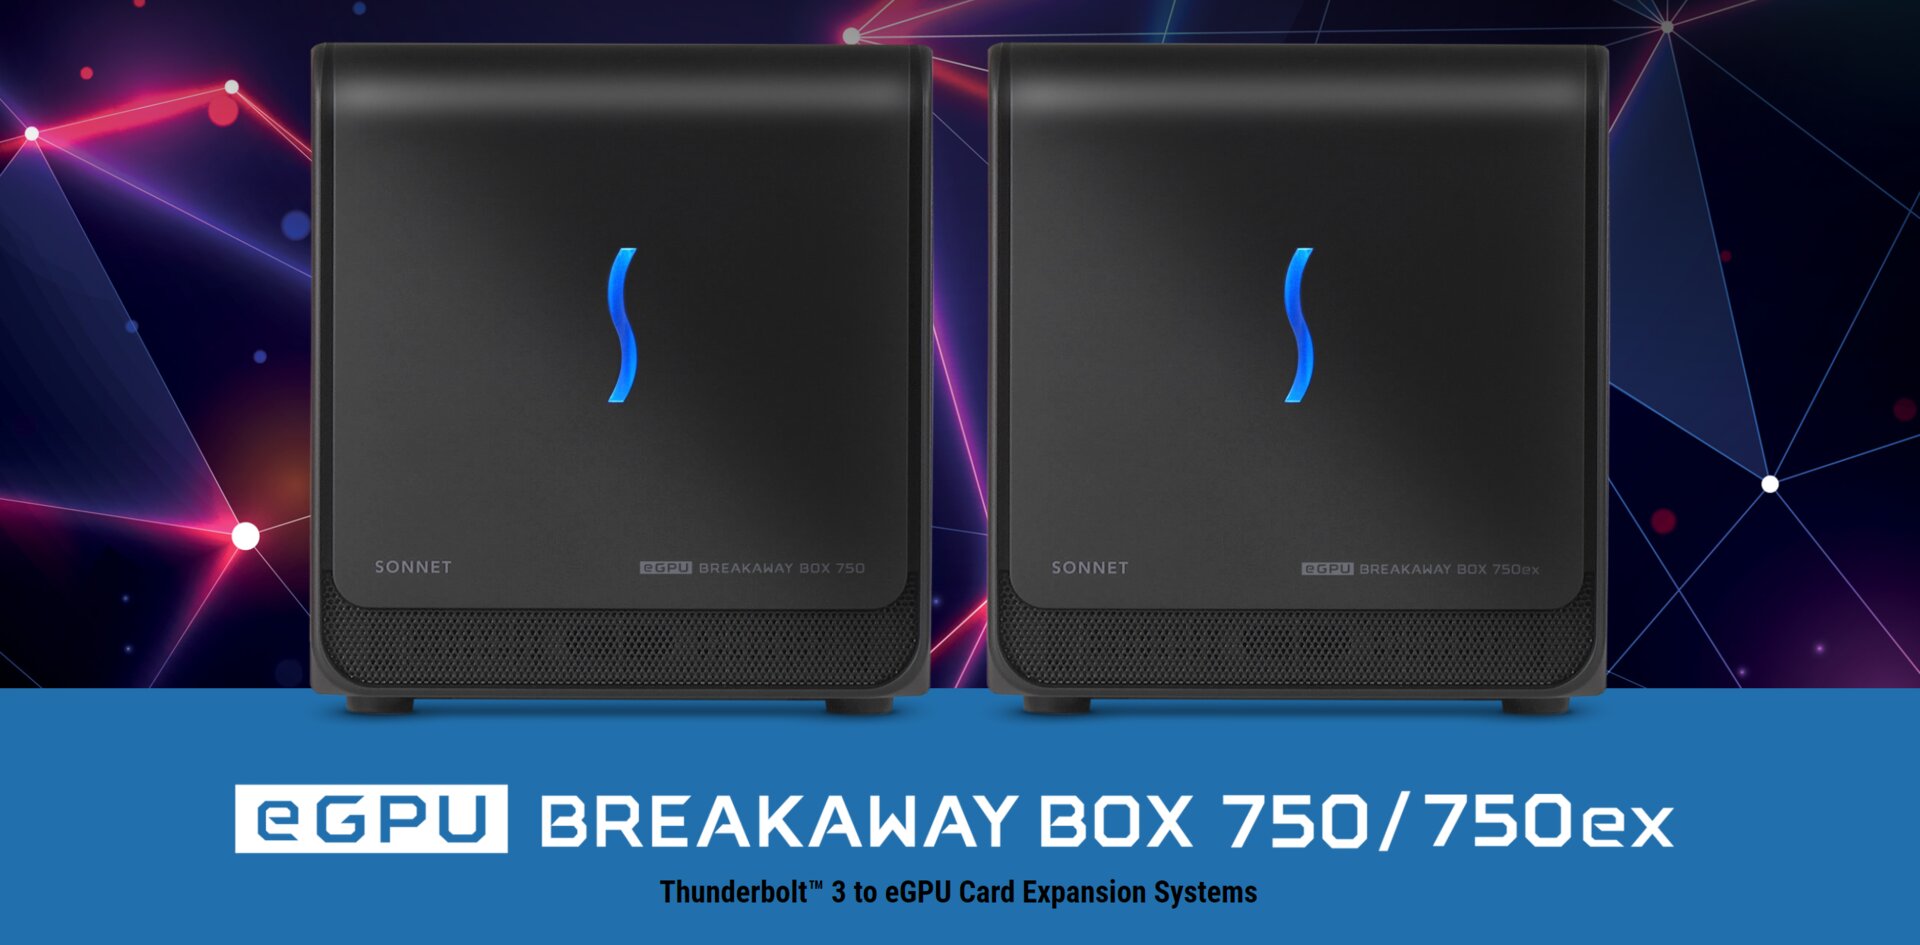 Sonnet Breakaway Box 750 / 750ex